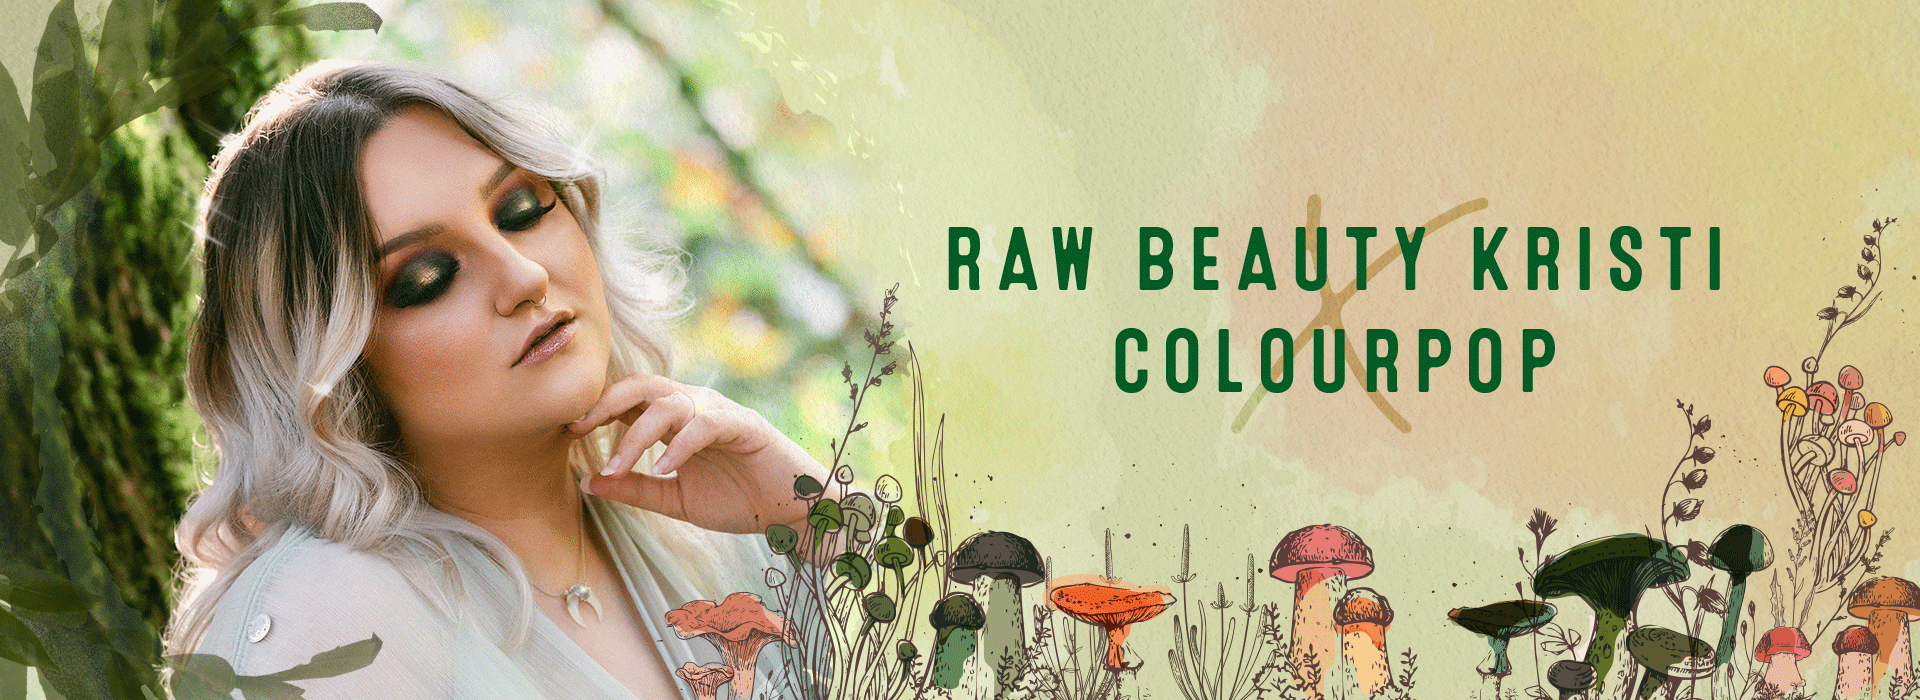 Raw Beauty Kristi x Colourpop Collection